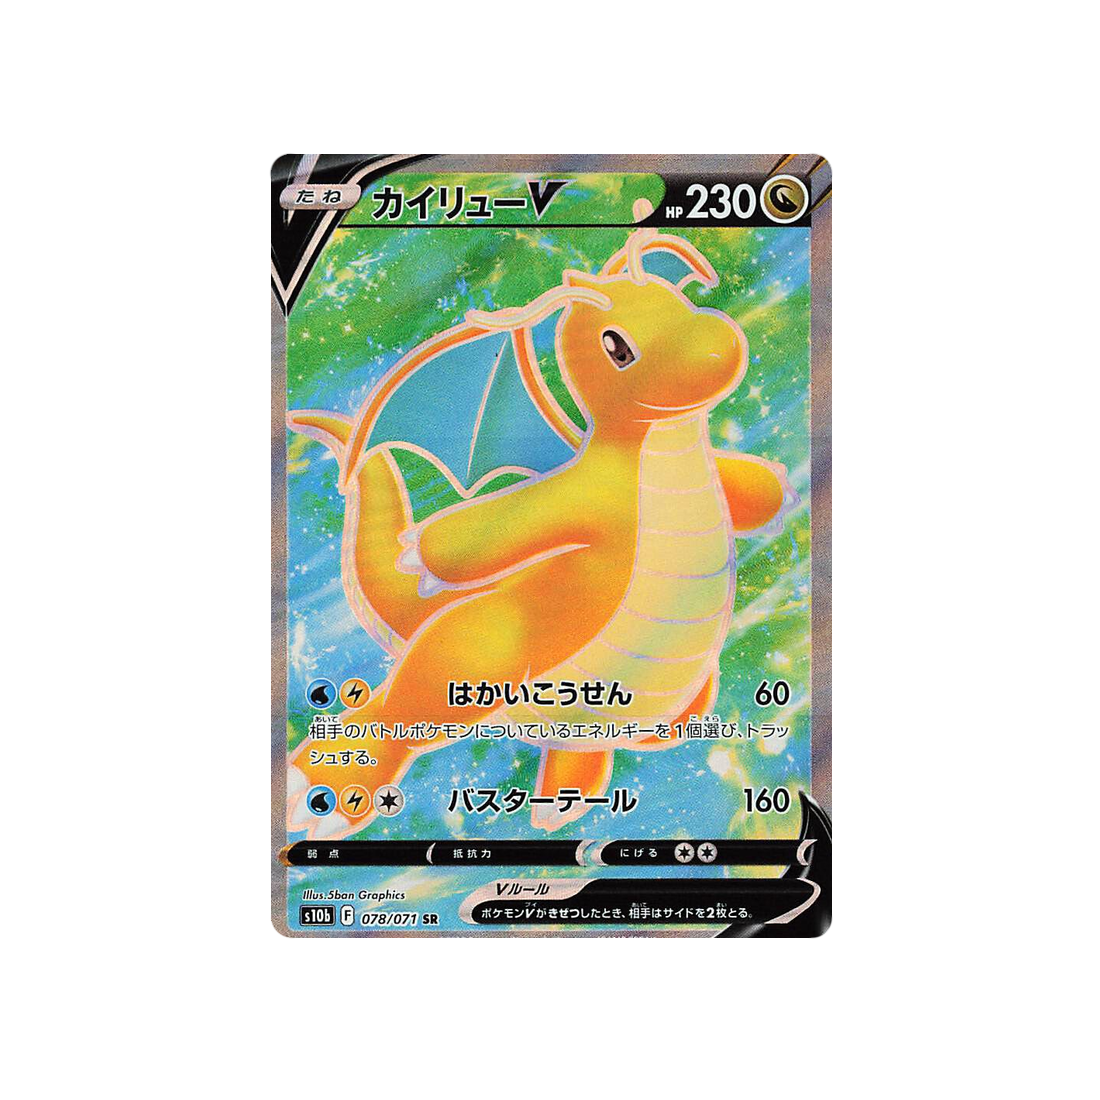 dracolosse-v-carte-pokemon-pokemon-go-s10b-078